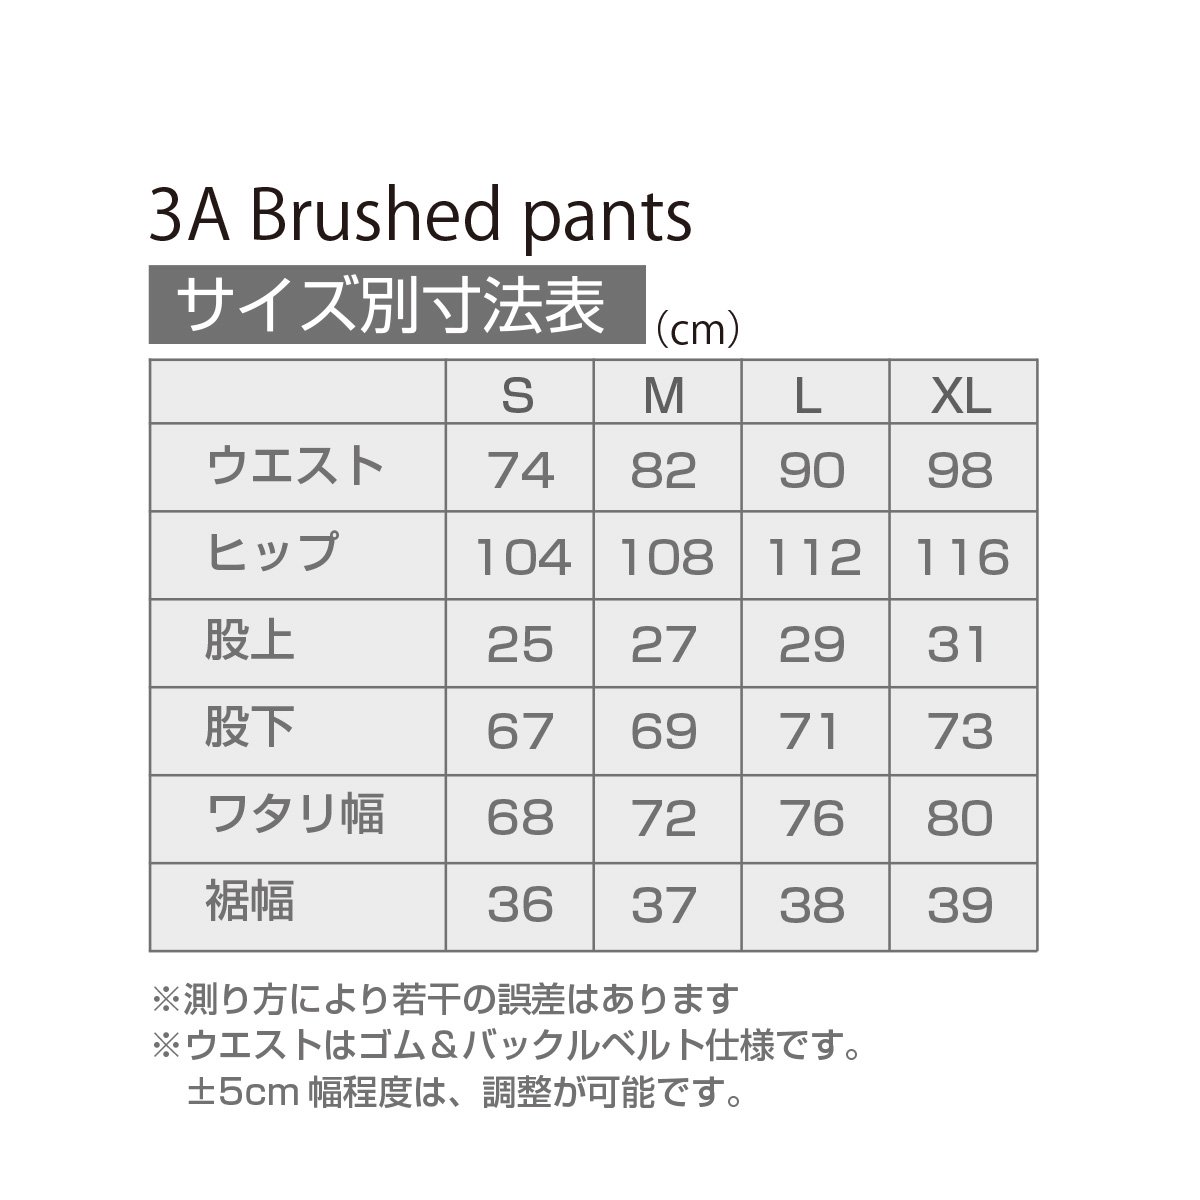 3A Brushed pants